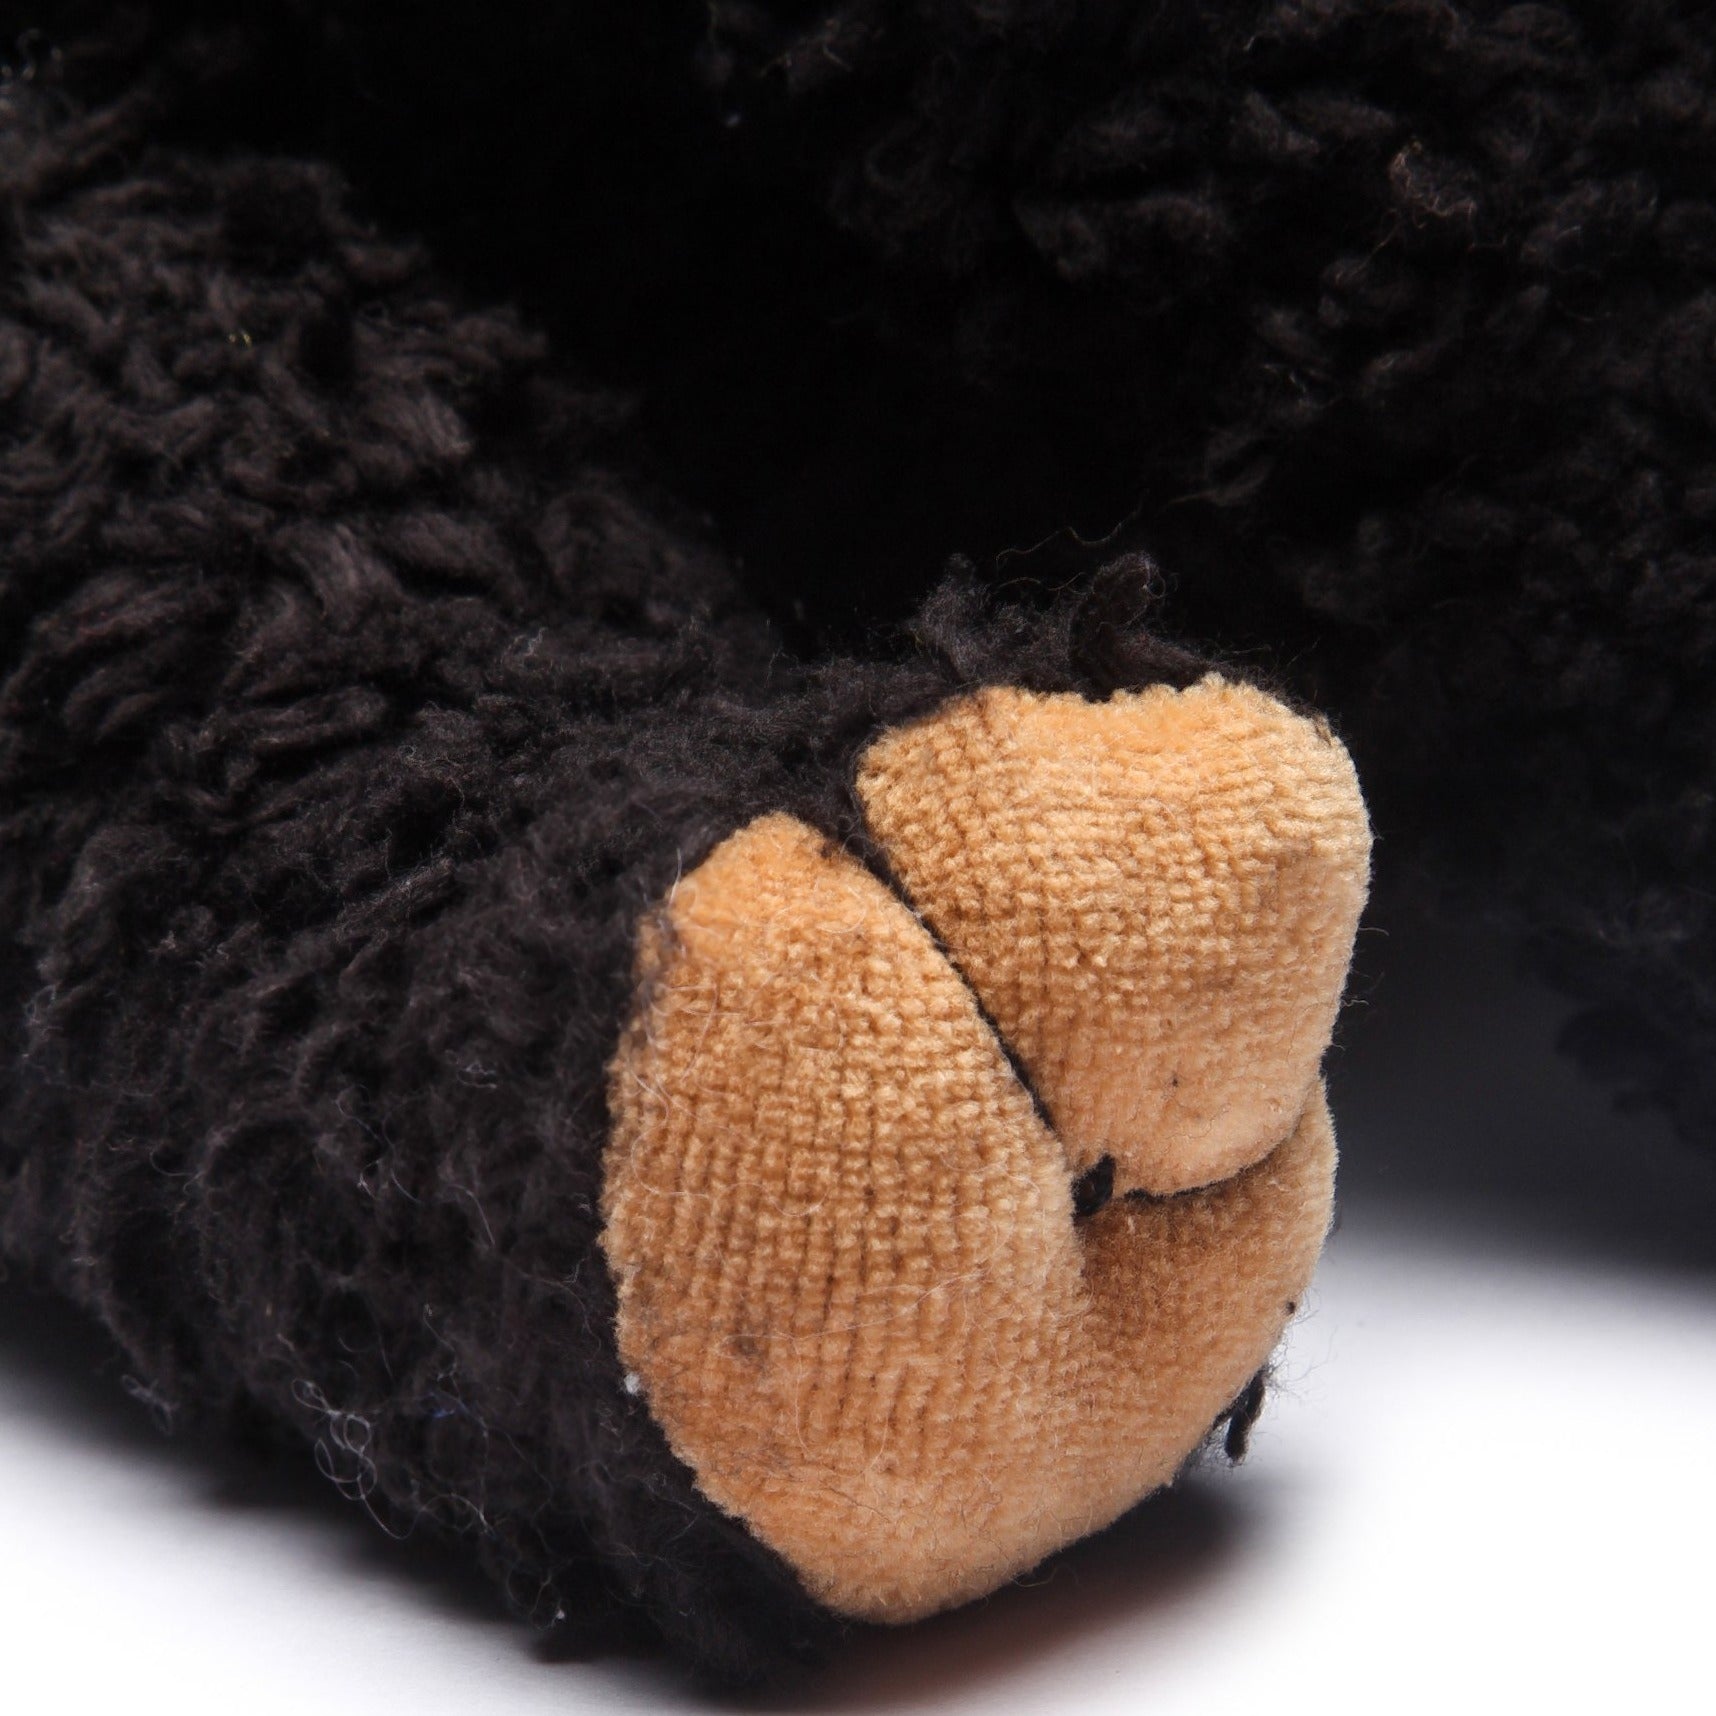 Black Bear 10 Organic Plush Toy - Stuffed Animal Soft Toy